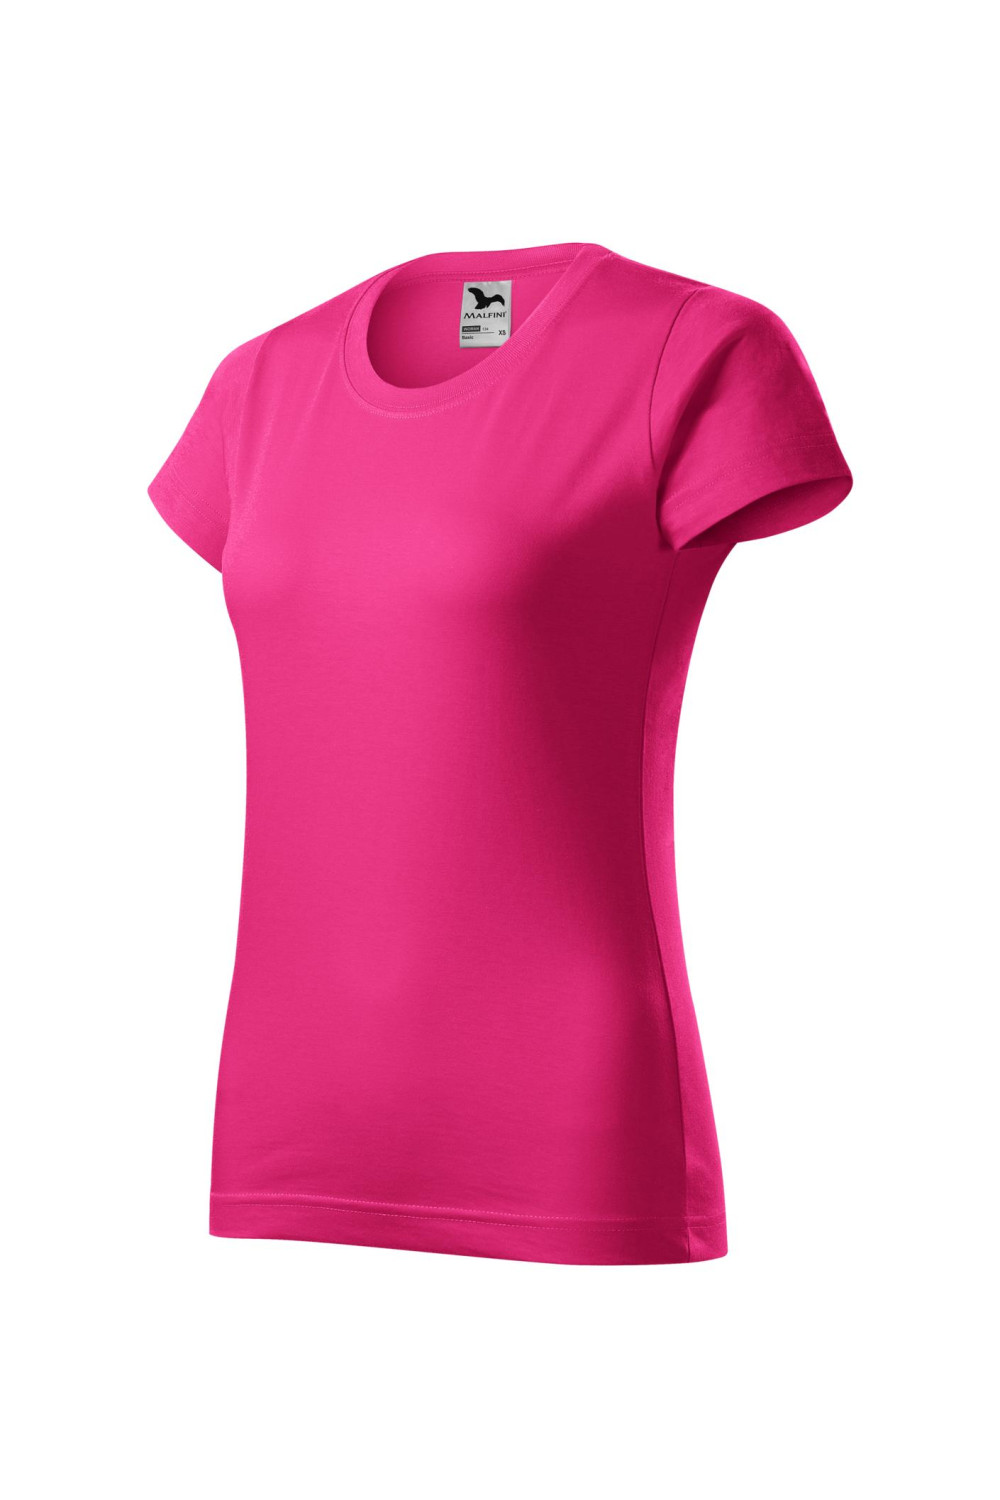 BASIC 134 MALFINI Koszulka damska 100% bawełna t-shirt czerwień purpurowa